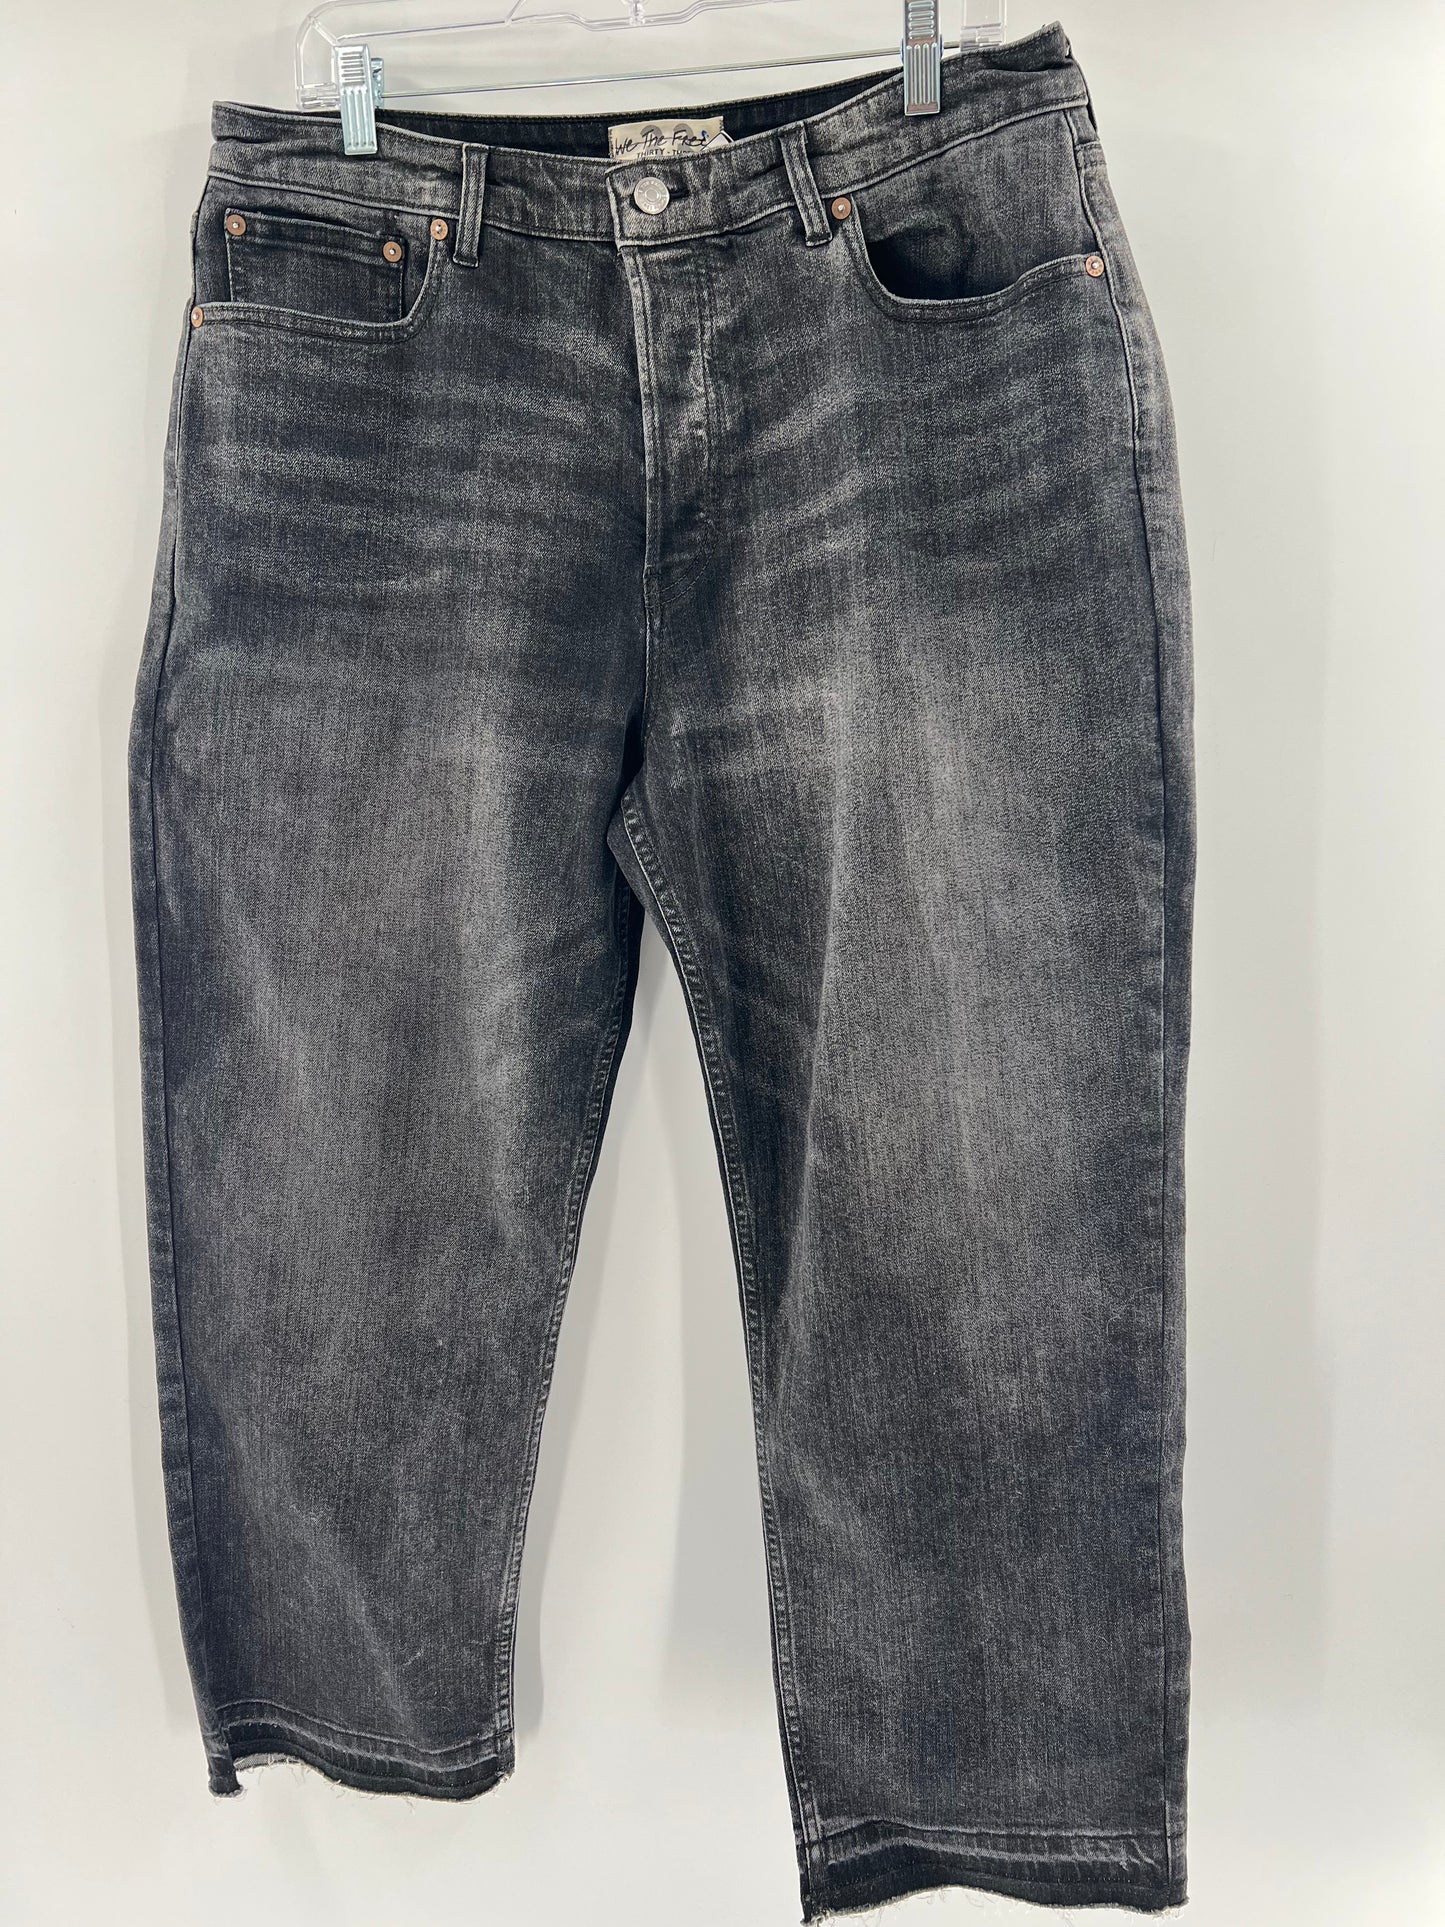 Black/Gray Free People Curvy Jeans (Size 33)